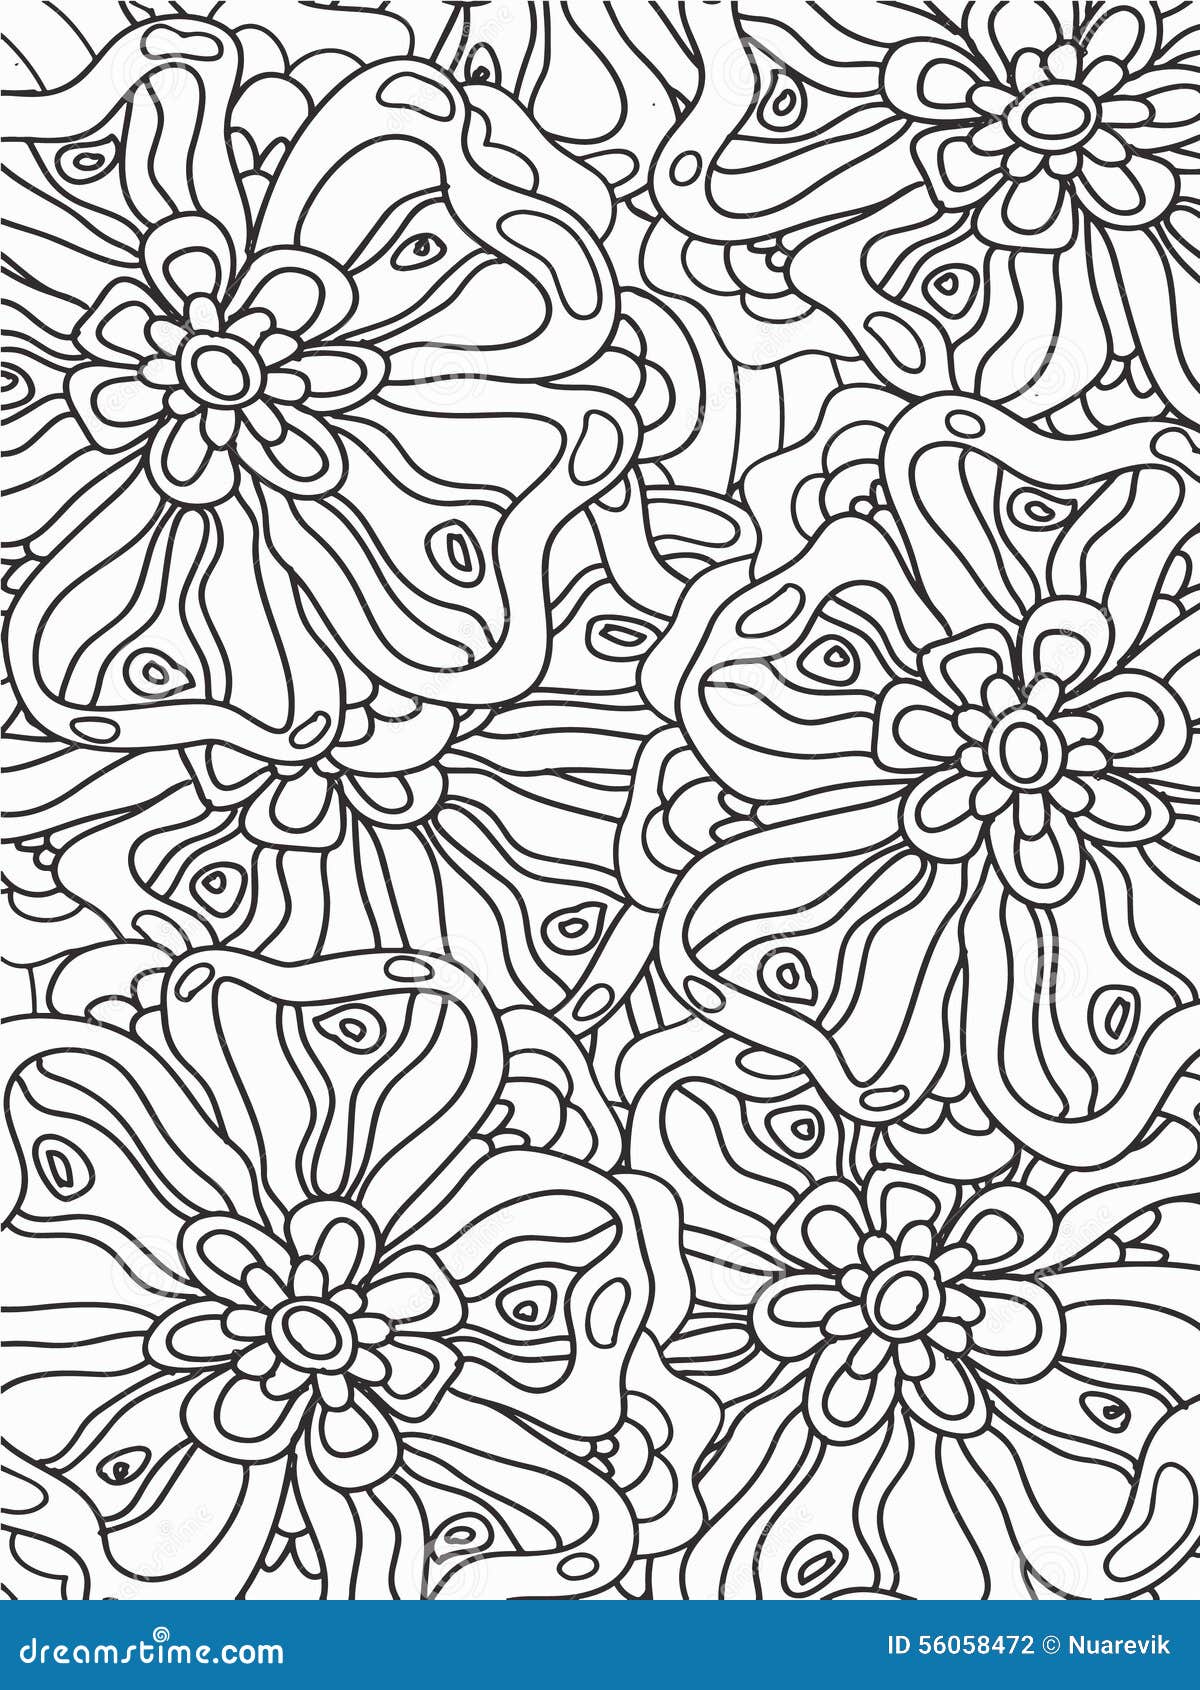 Download Flowers zentangle stock illustration. Illustration of ...